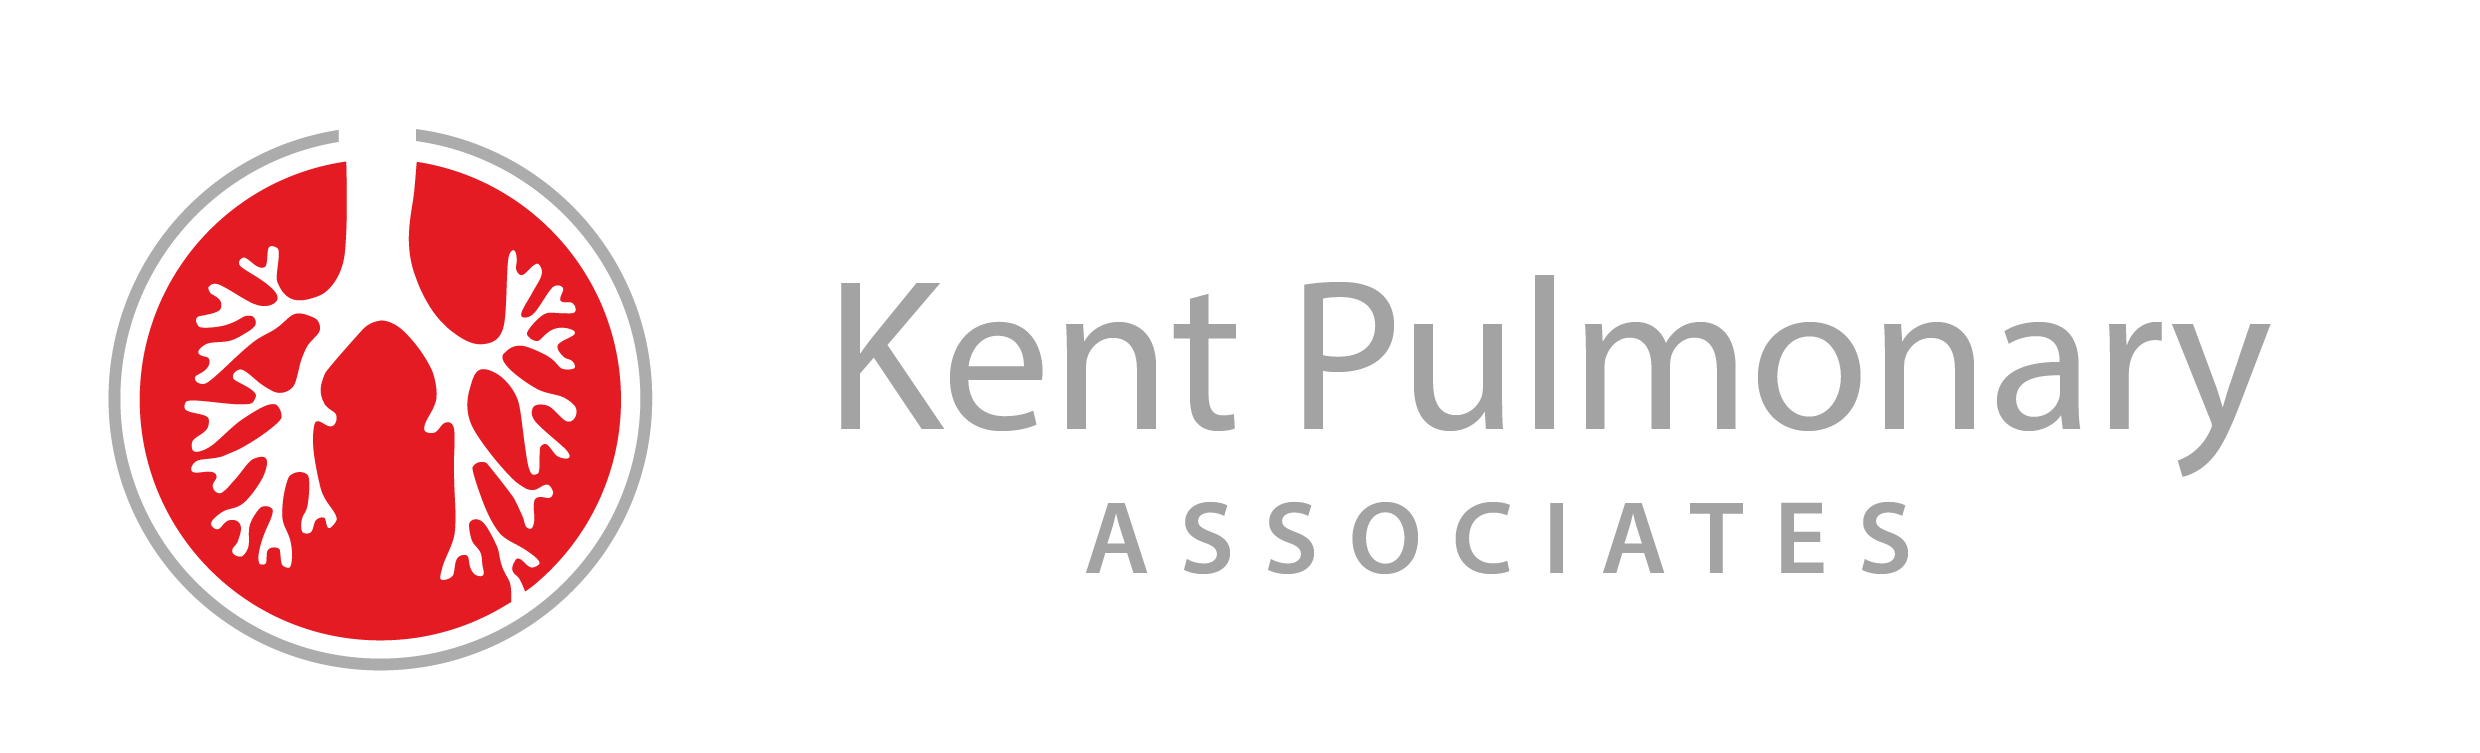 Kent Pulmonary Associates